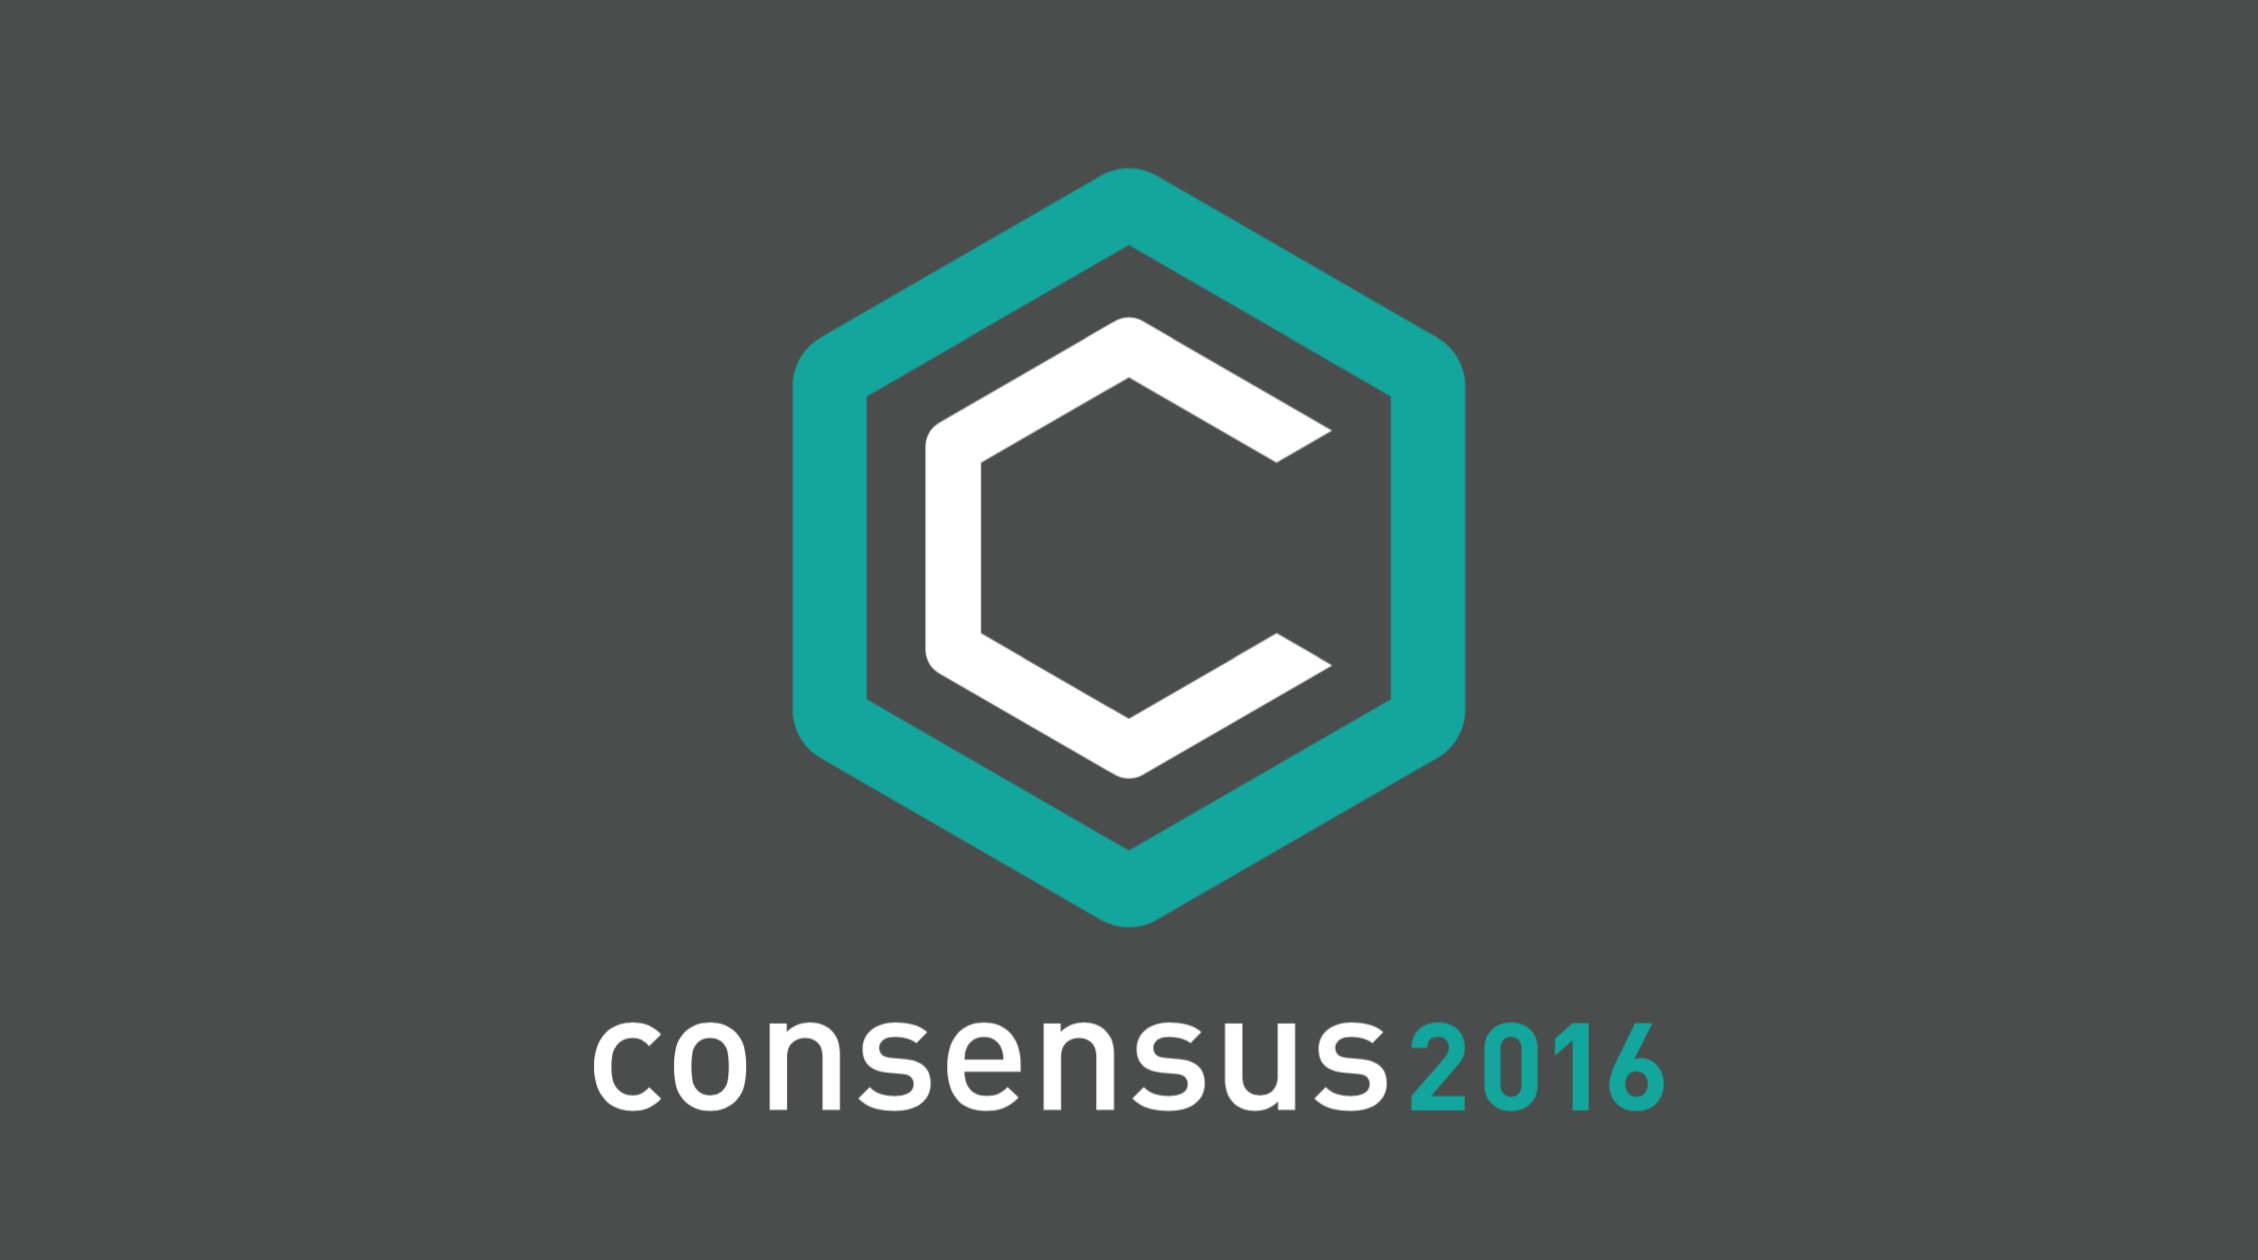 Consensus 2016 Blockchain Logo - CoinDesk Releases Full Agenda for Consensus 2016 Blockchain